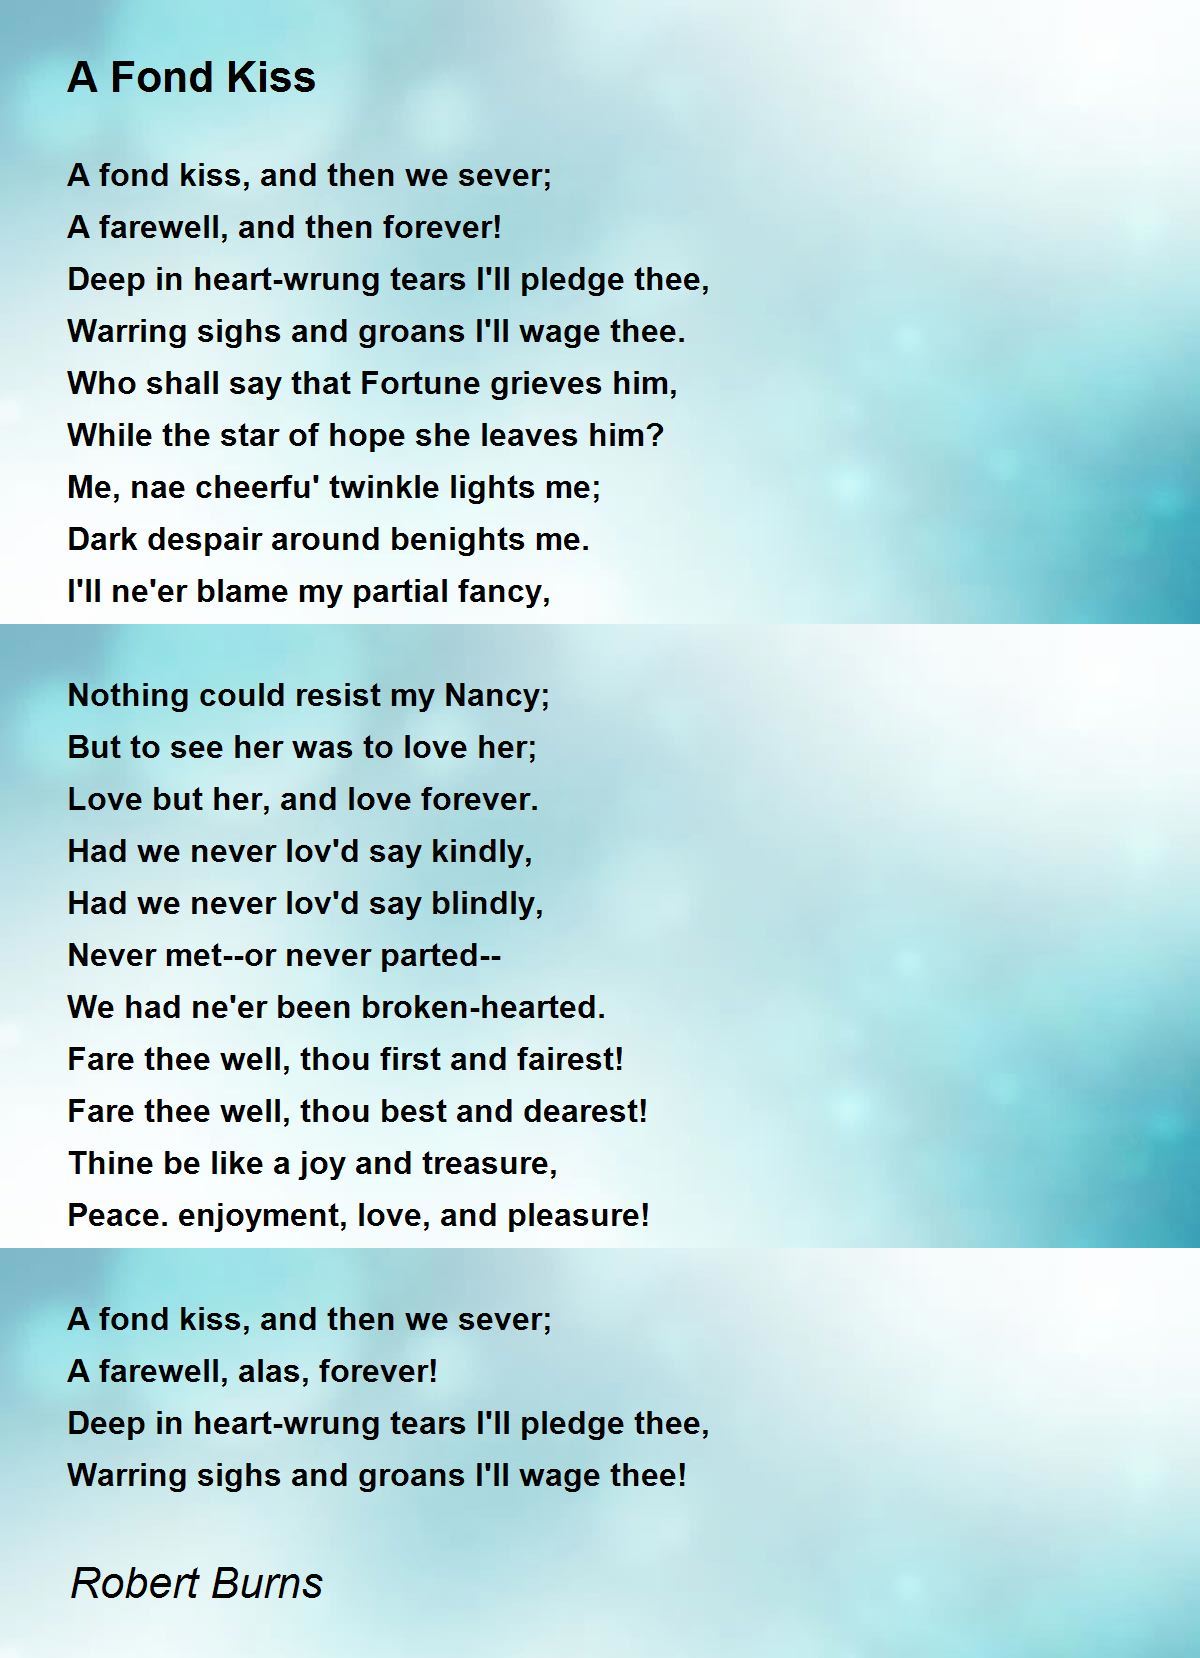 A Fond Kiss Poem by Robert Burns - Poem Hunter Comments